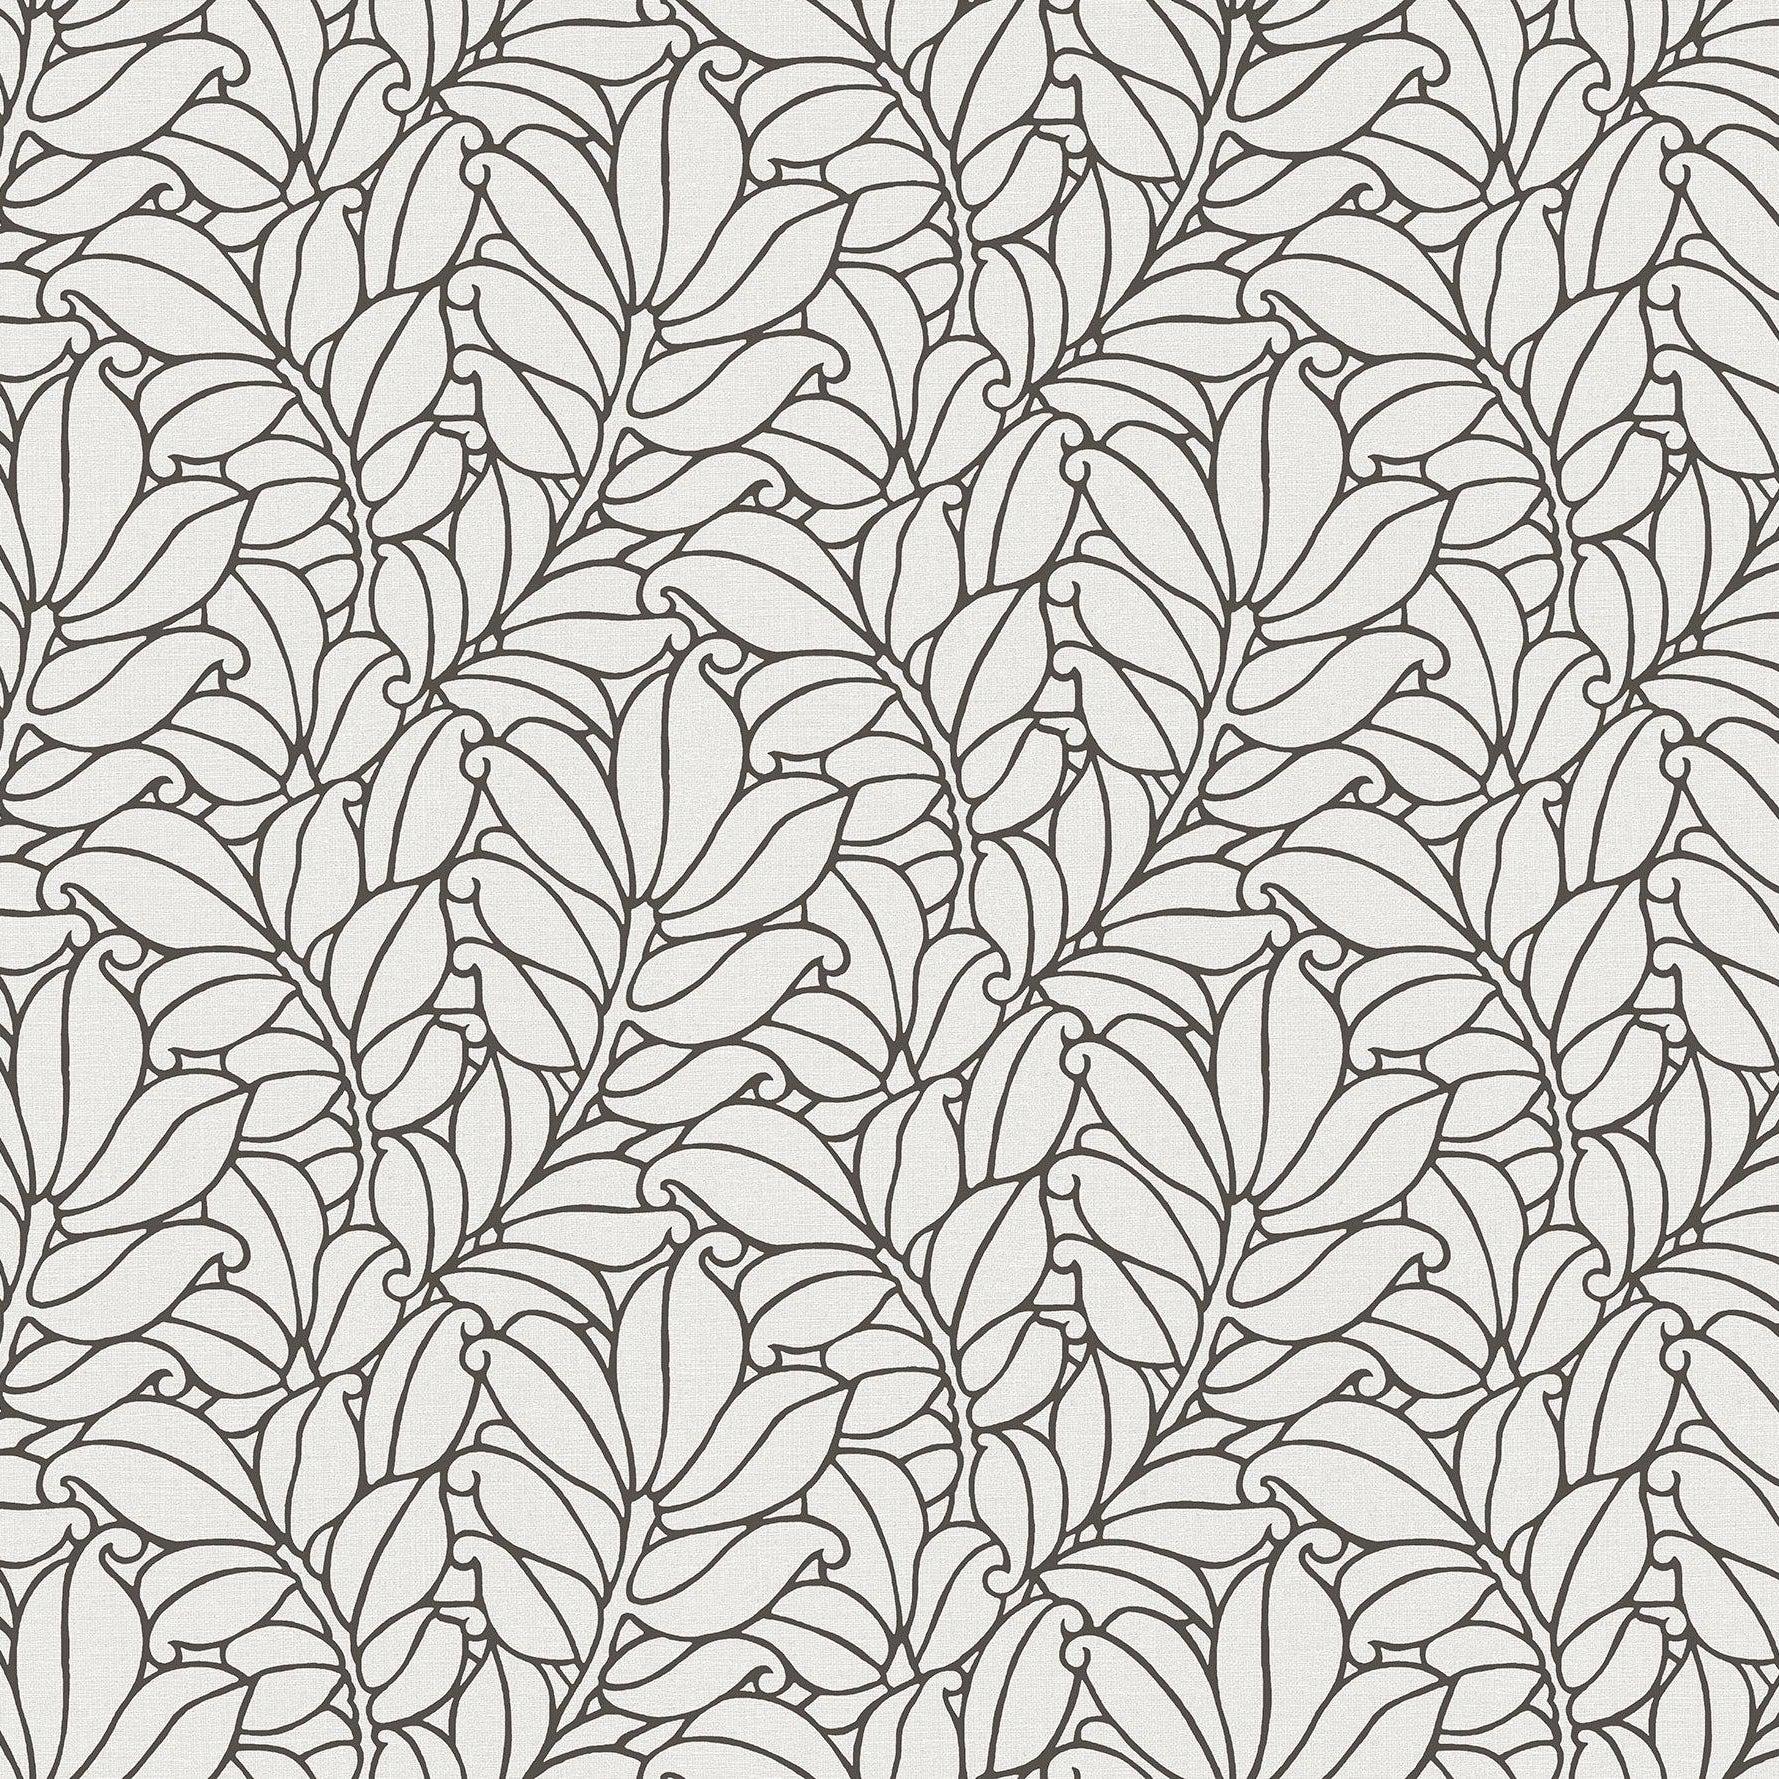 Acquire 2971-86322 Dimensions Coraline White Leaf White A-Street Prints Wallpaper